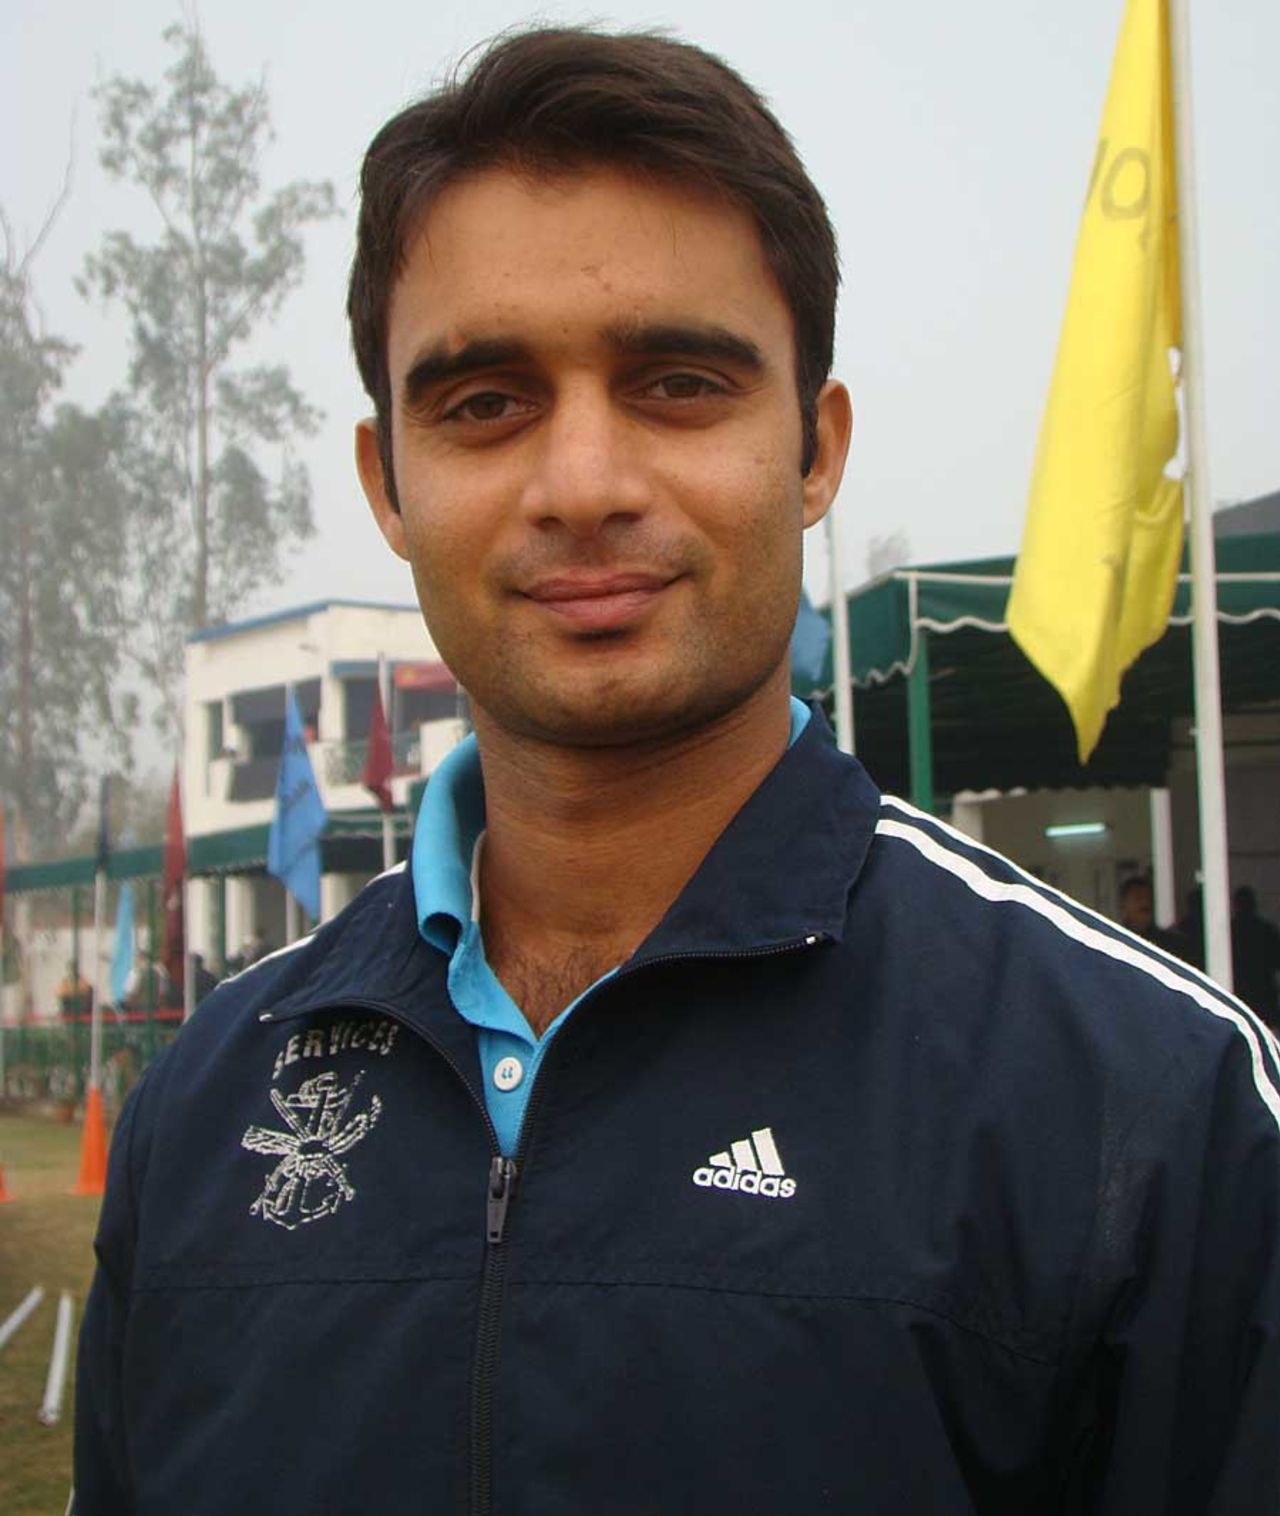 Shadab Nazar, player portrait, Delhi, January 16, 2013